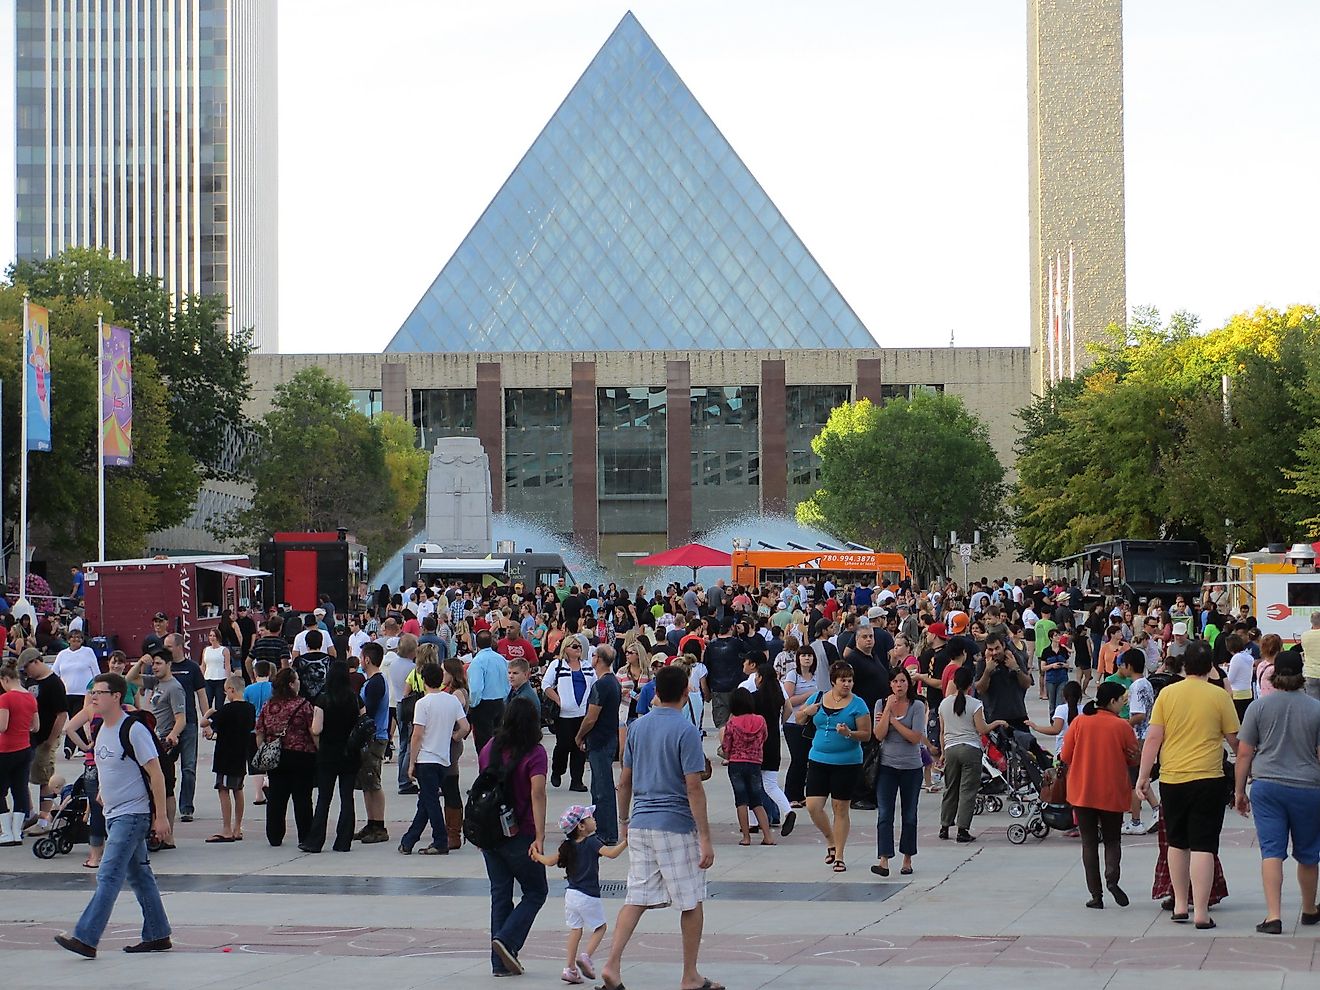 The bustling Churchill Square in Edmonton. Image credit: Mack Male/Flickr.com